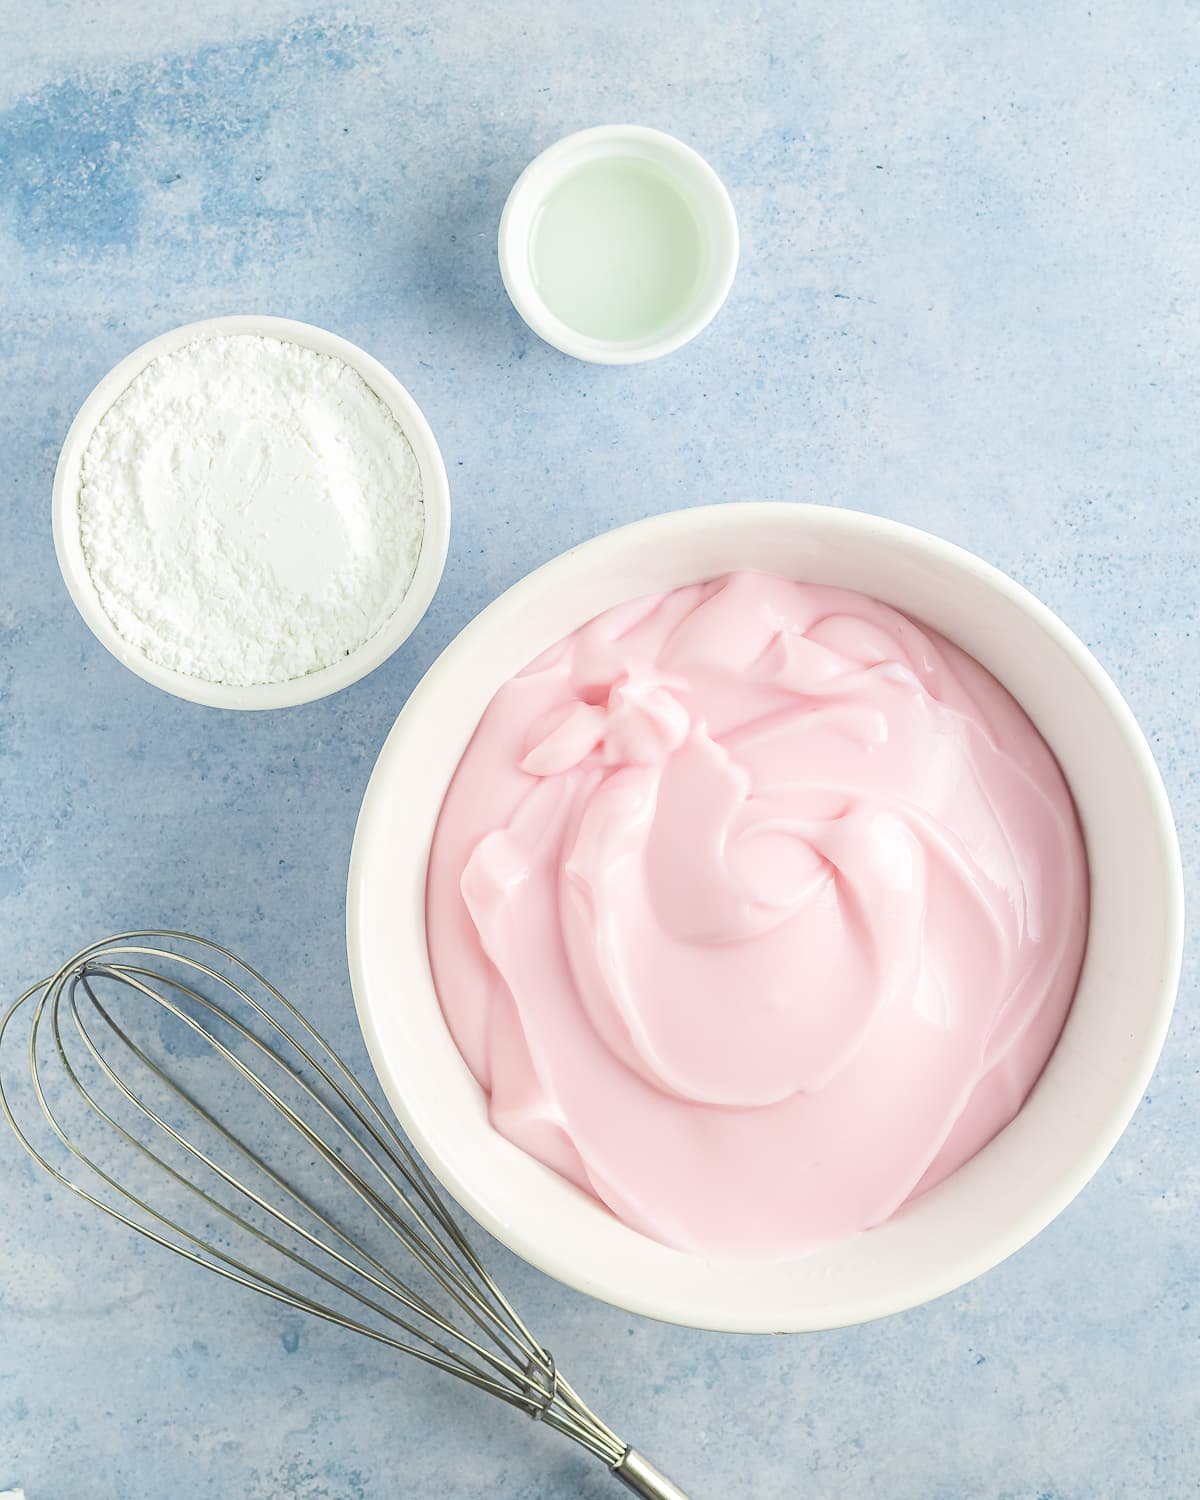 ingredients needed to make Frozen Yogurt